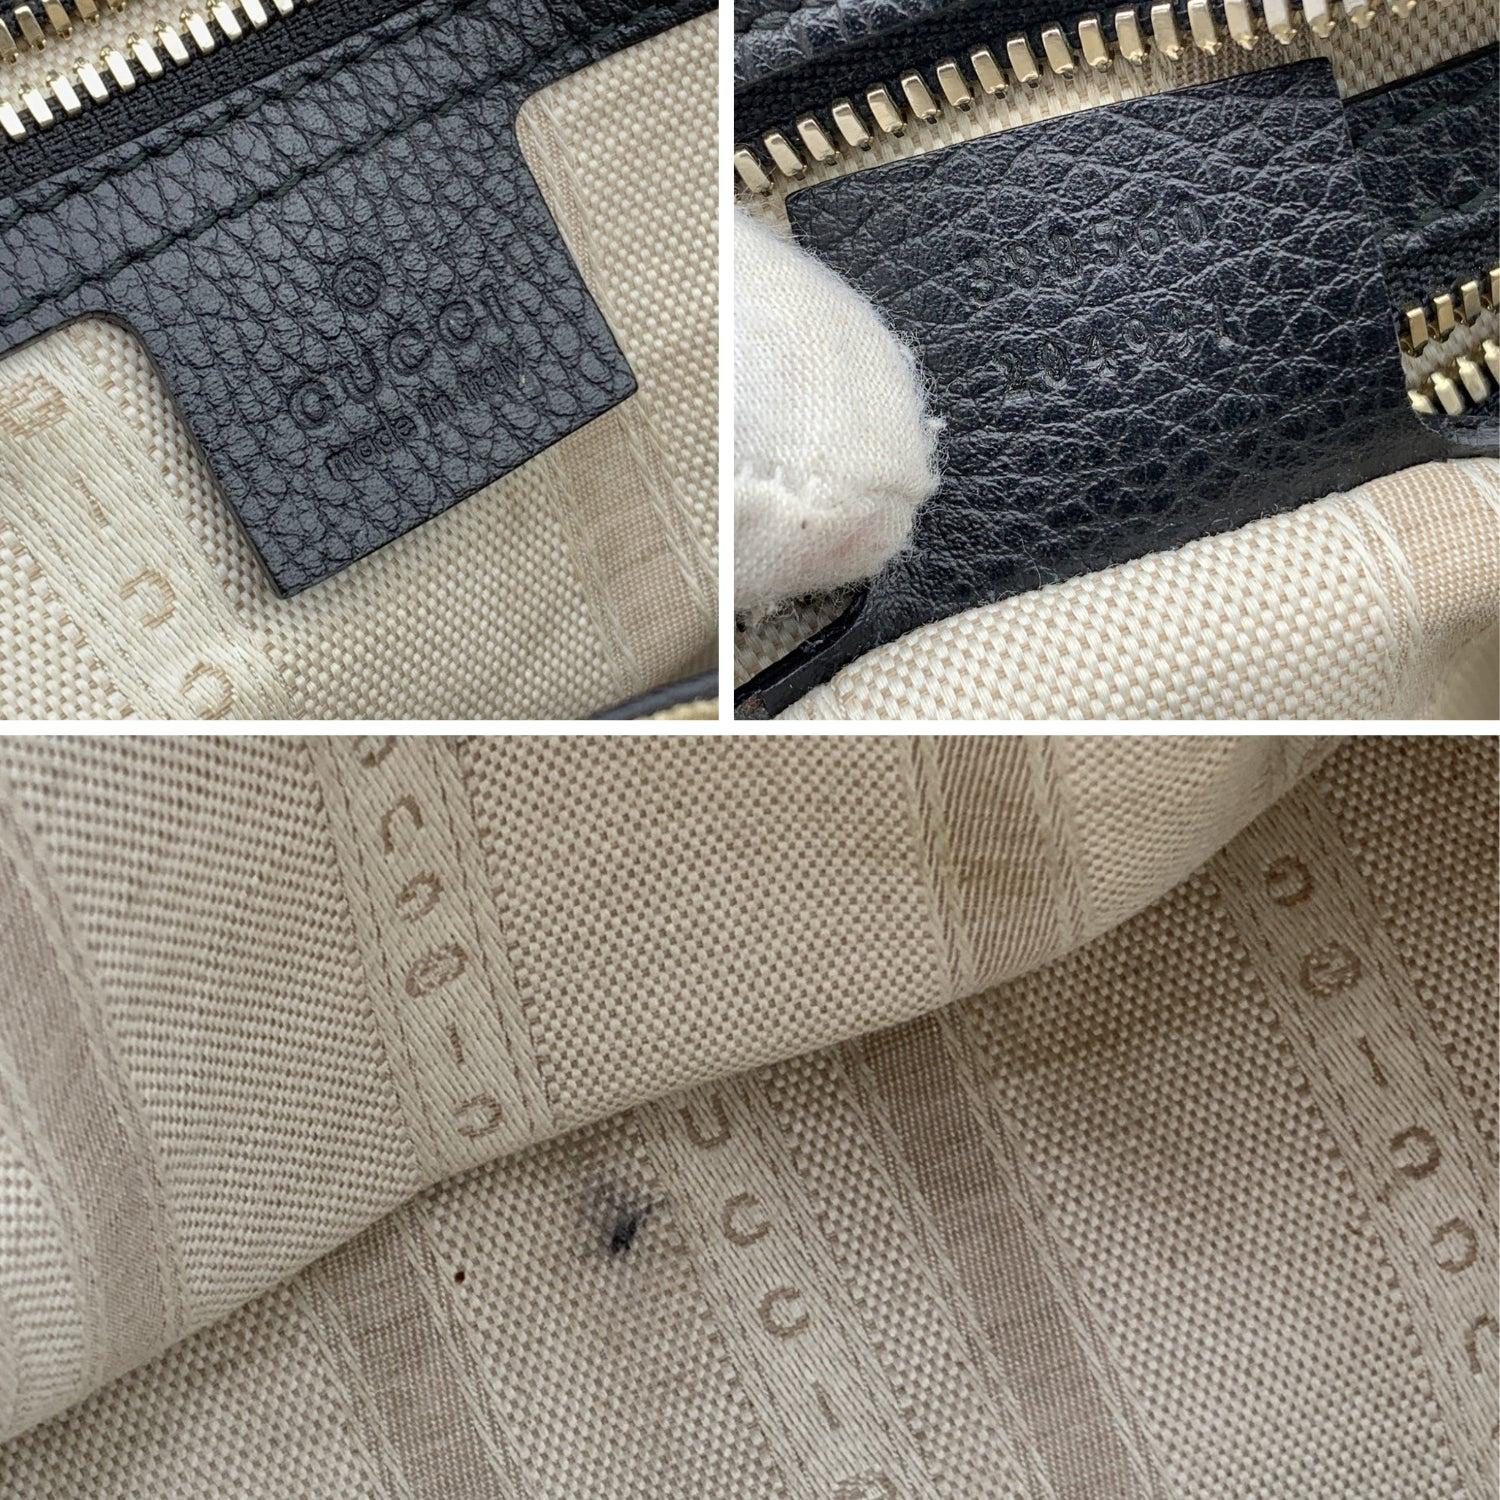 Gucci Black Leather Lady Dollar Dome Satchel Bag Handbag 2